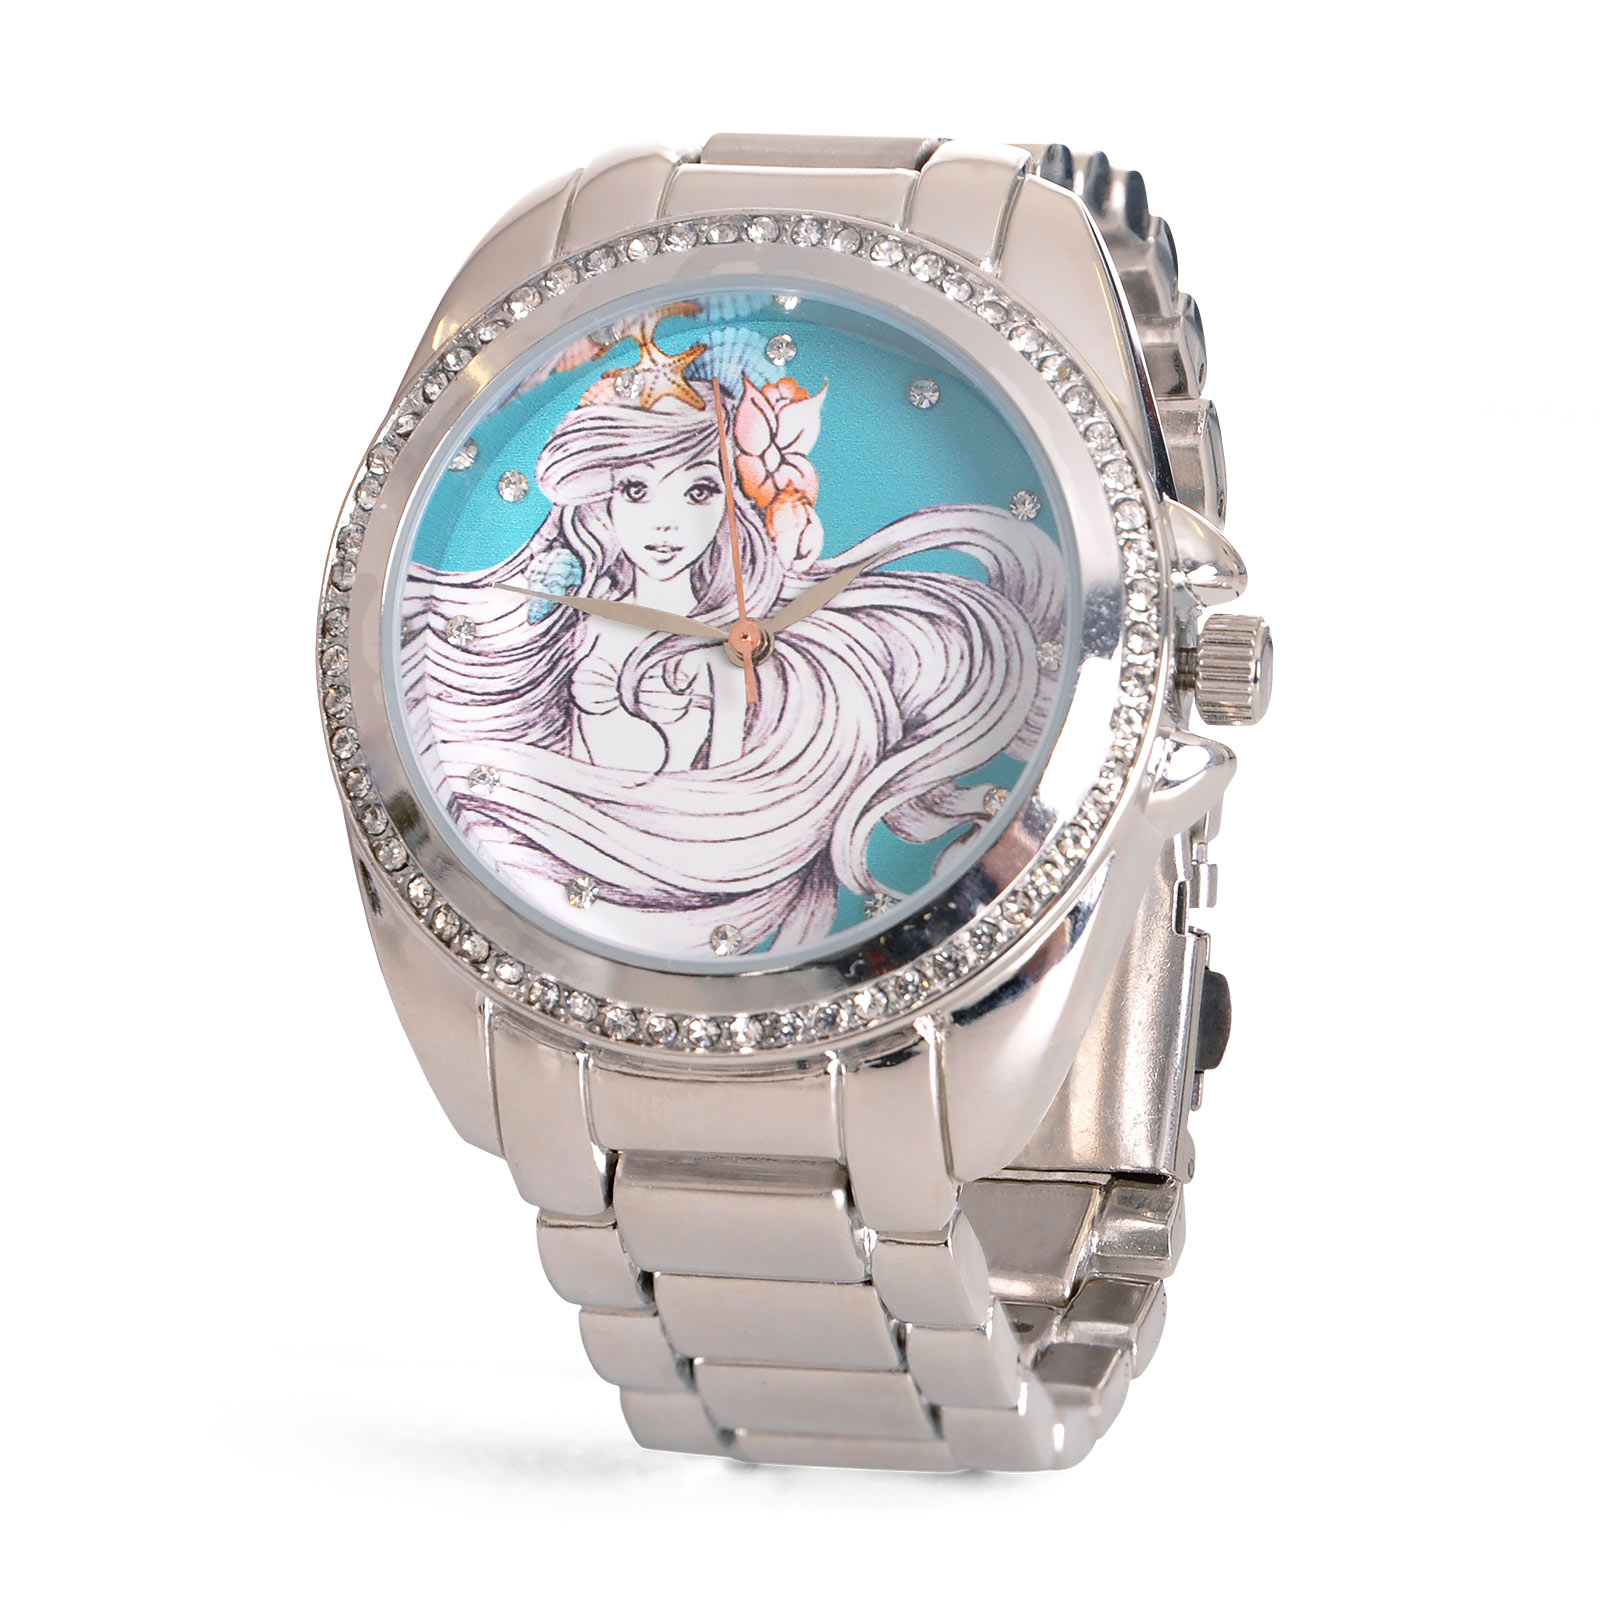 Ariel - Sketch Wristwatch with Crystals